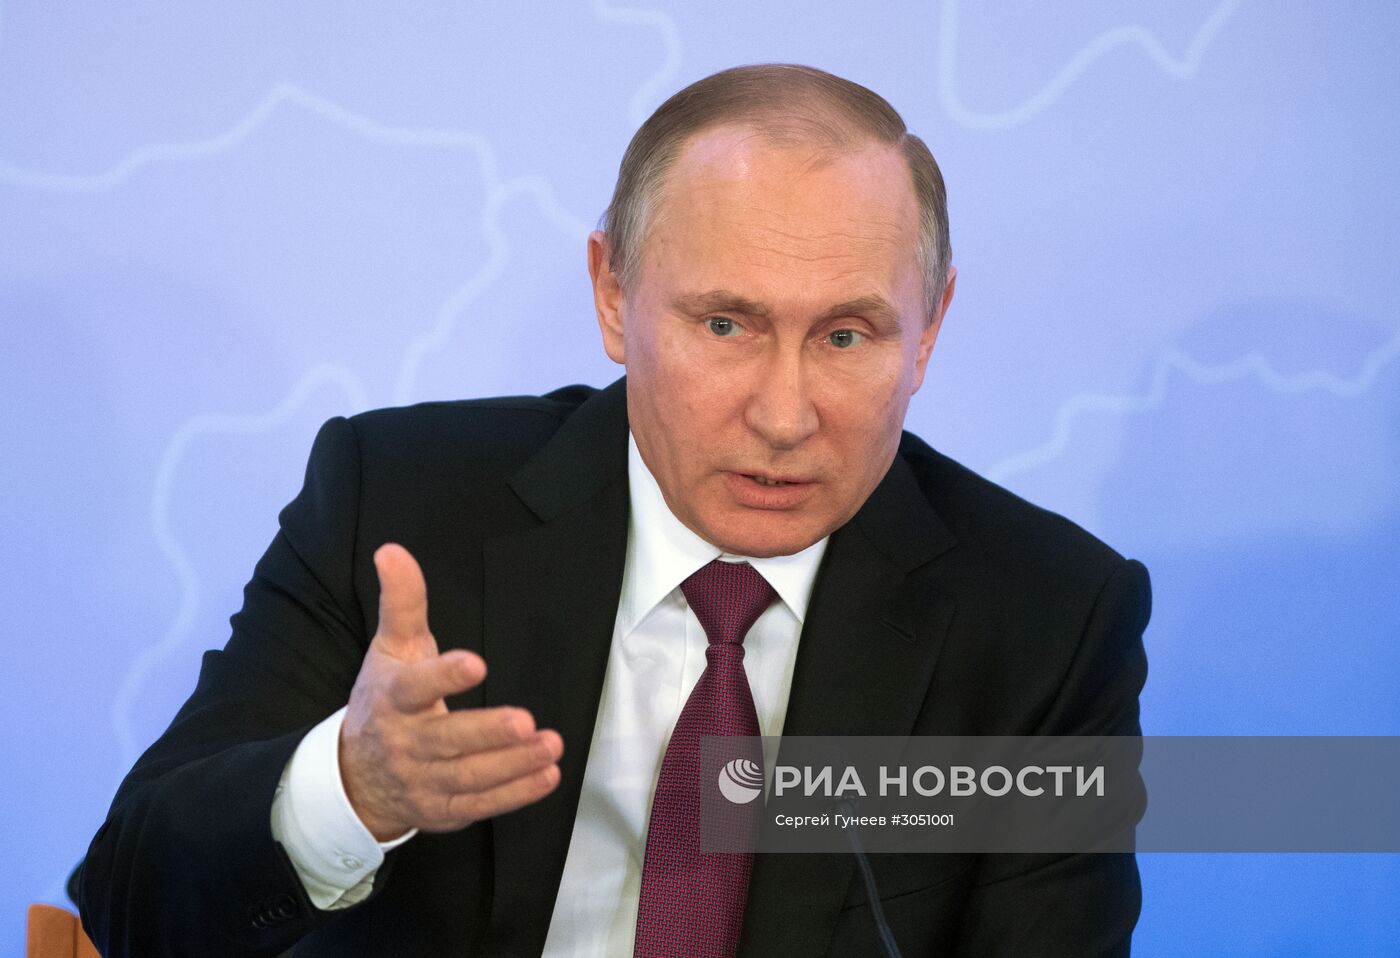 Президент РФ В. Путин принял участие в пленарном заседании съезда РСПП